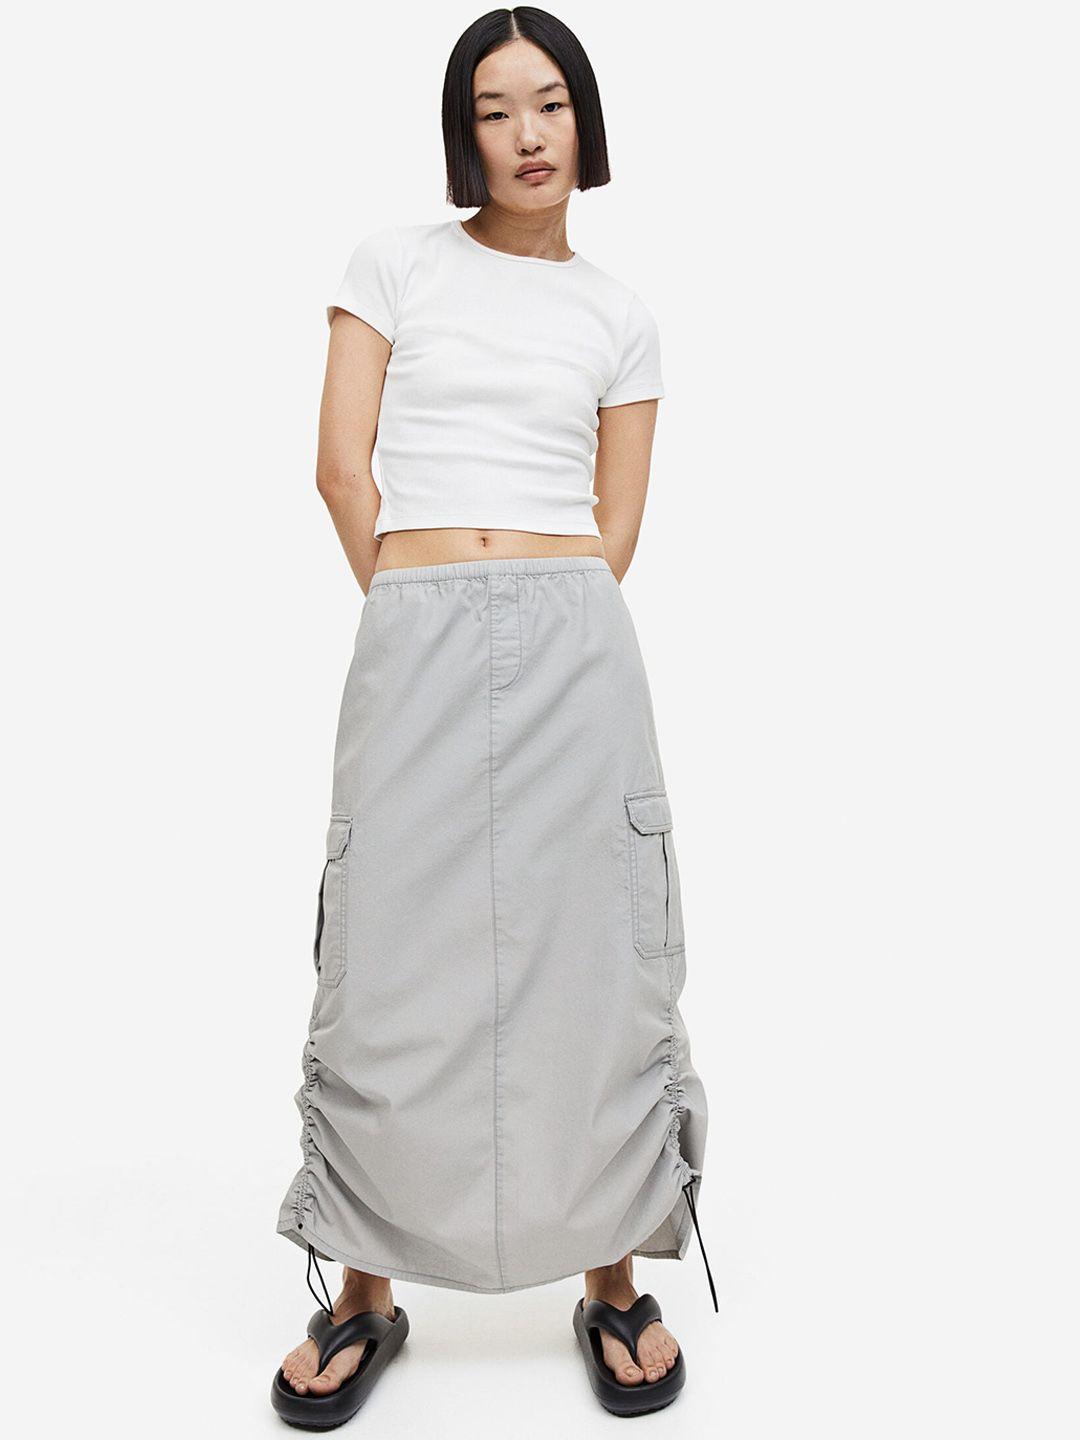 h&m cotton parachute skirt